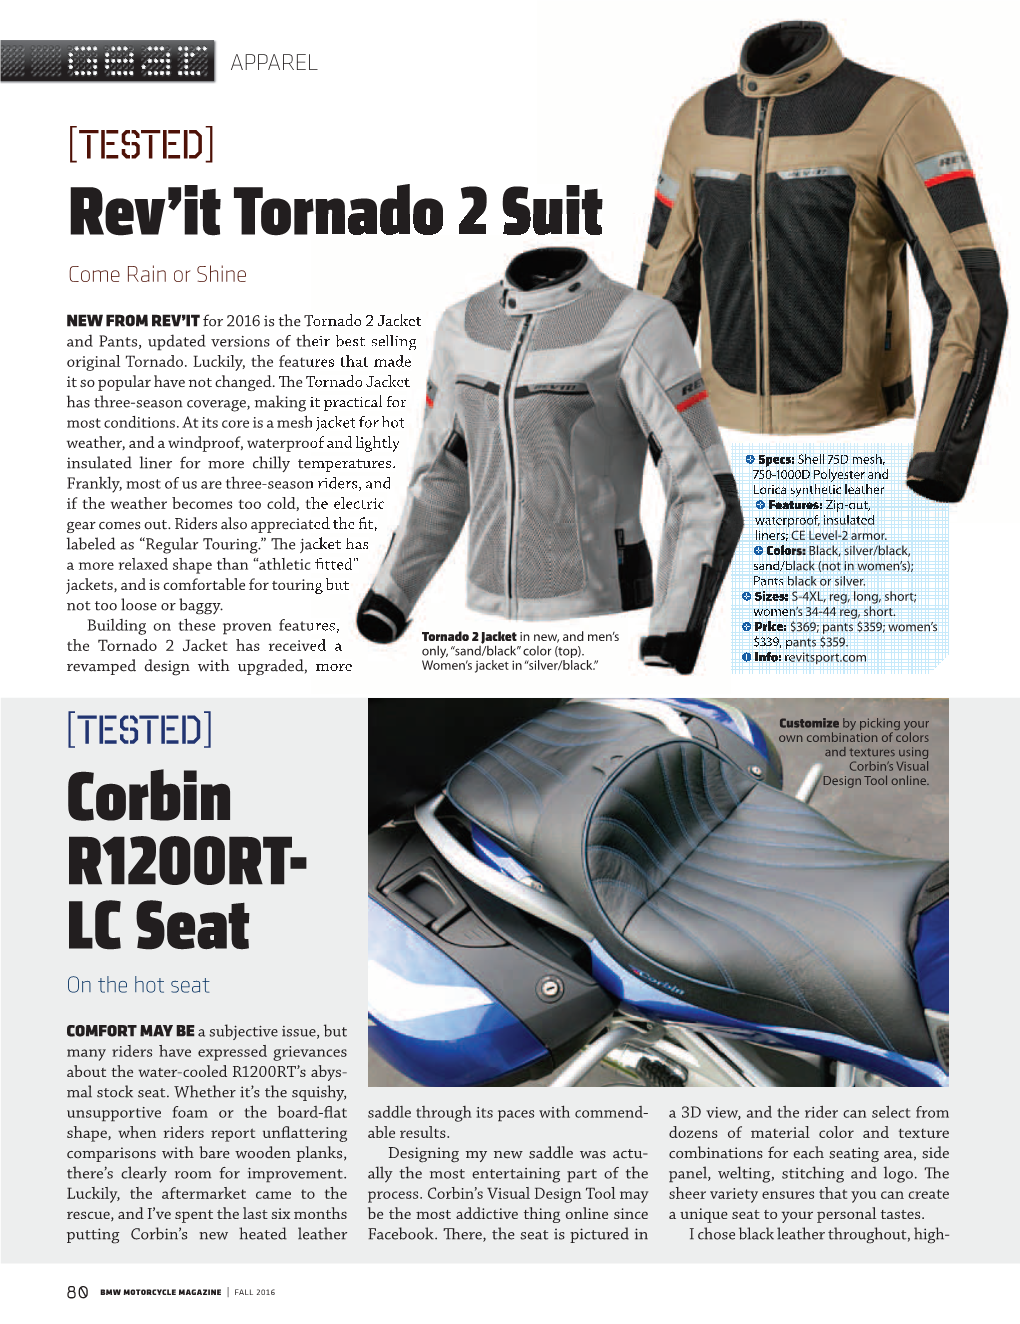 Rev'it Tornado 2 Suit Corbin R1200rt- LC Seat